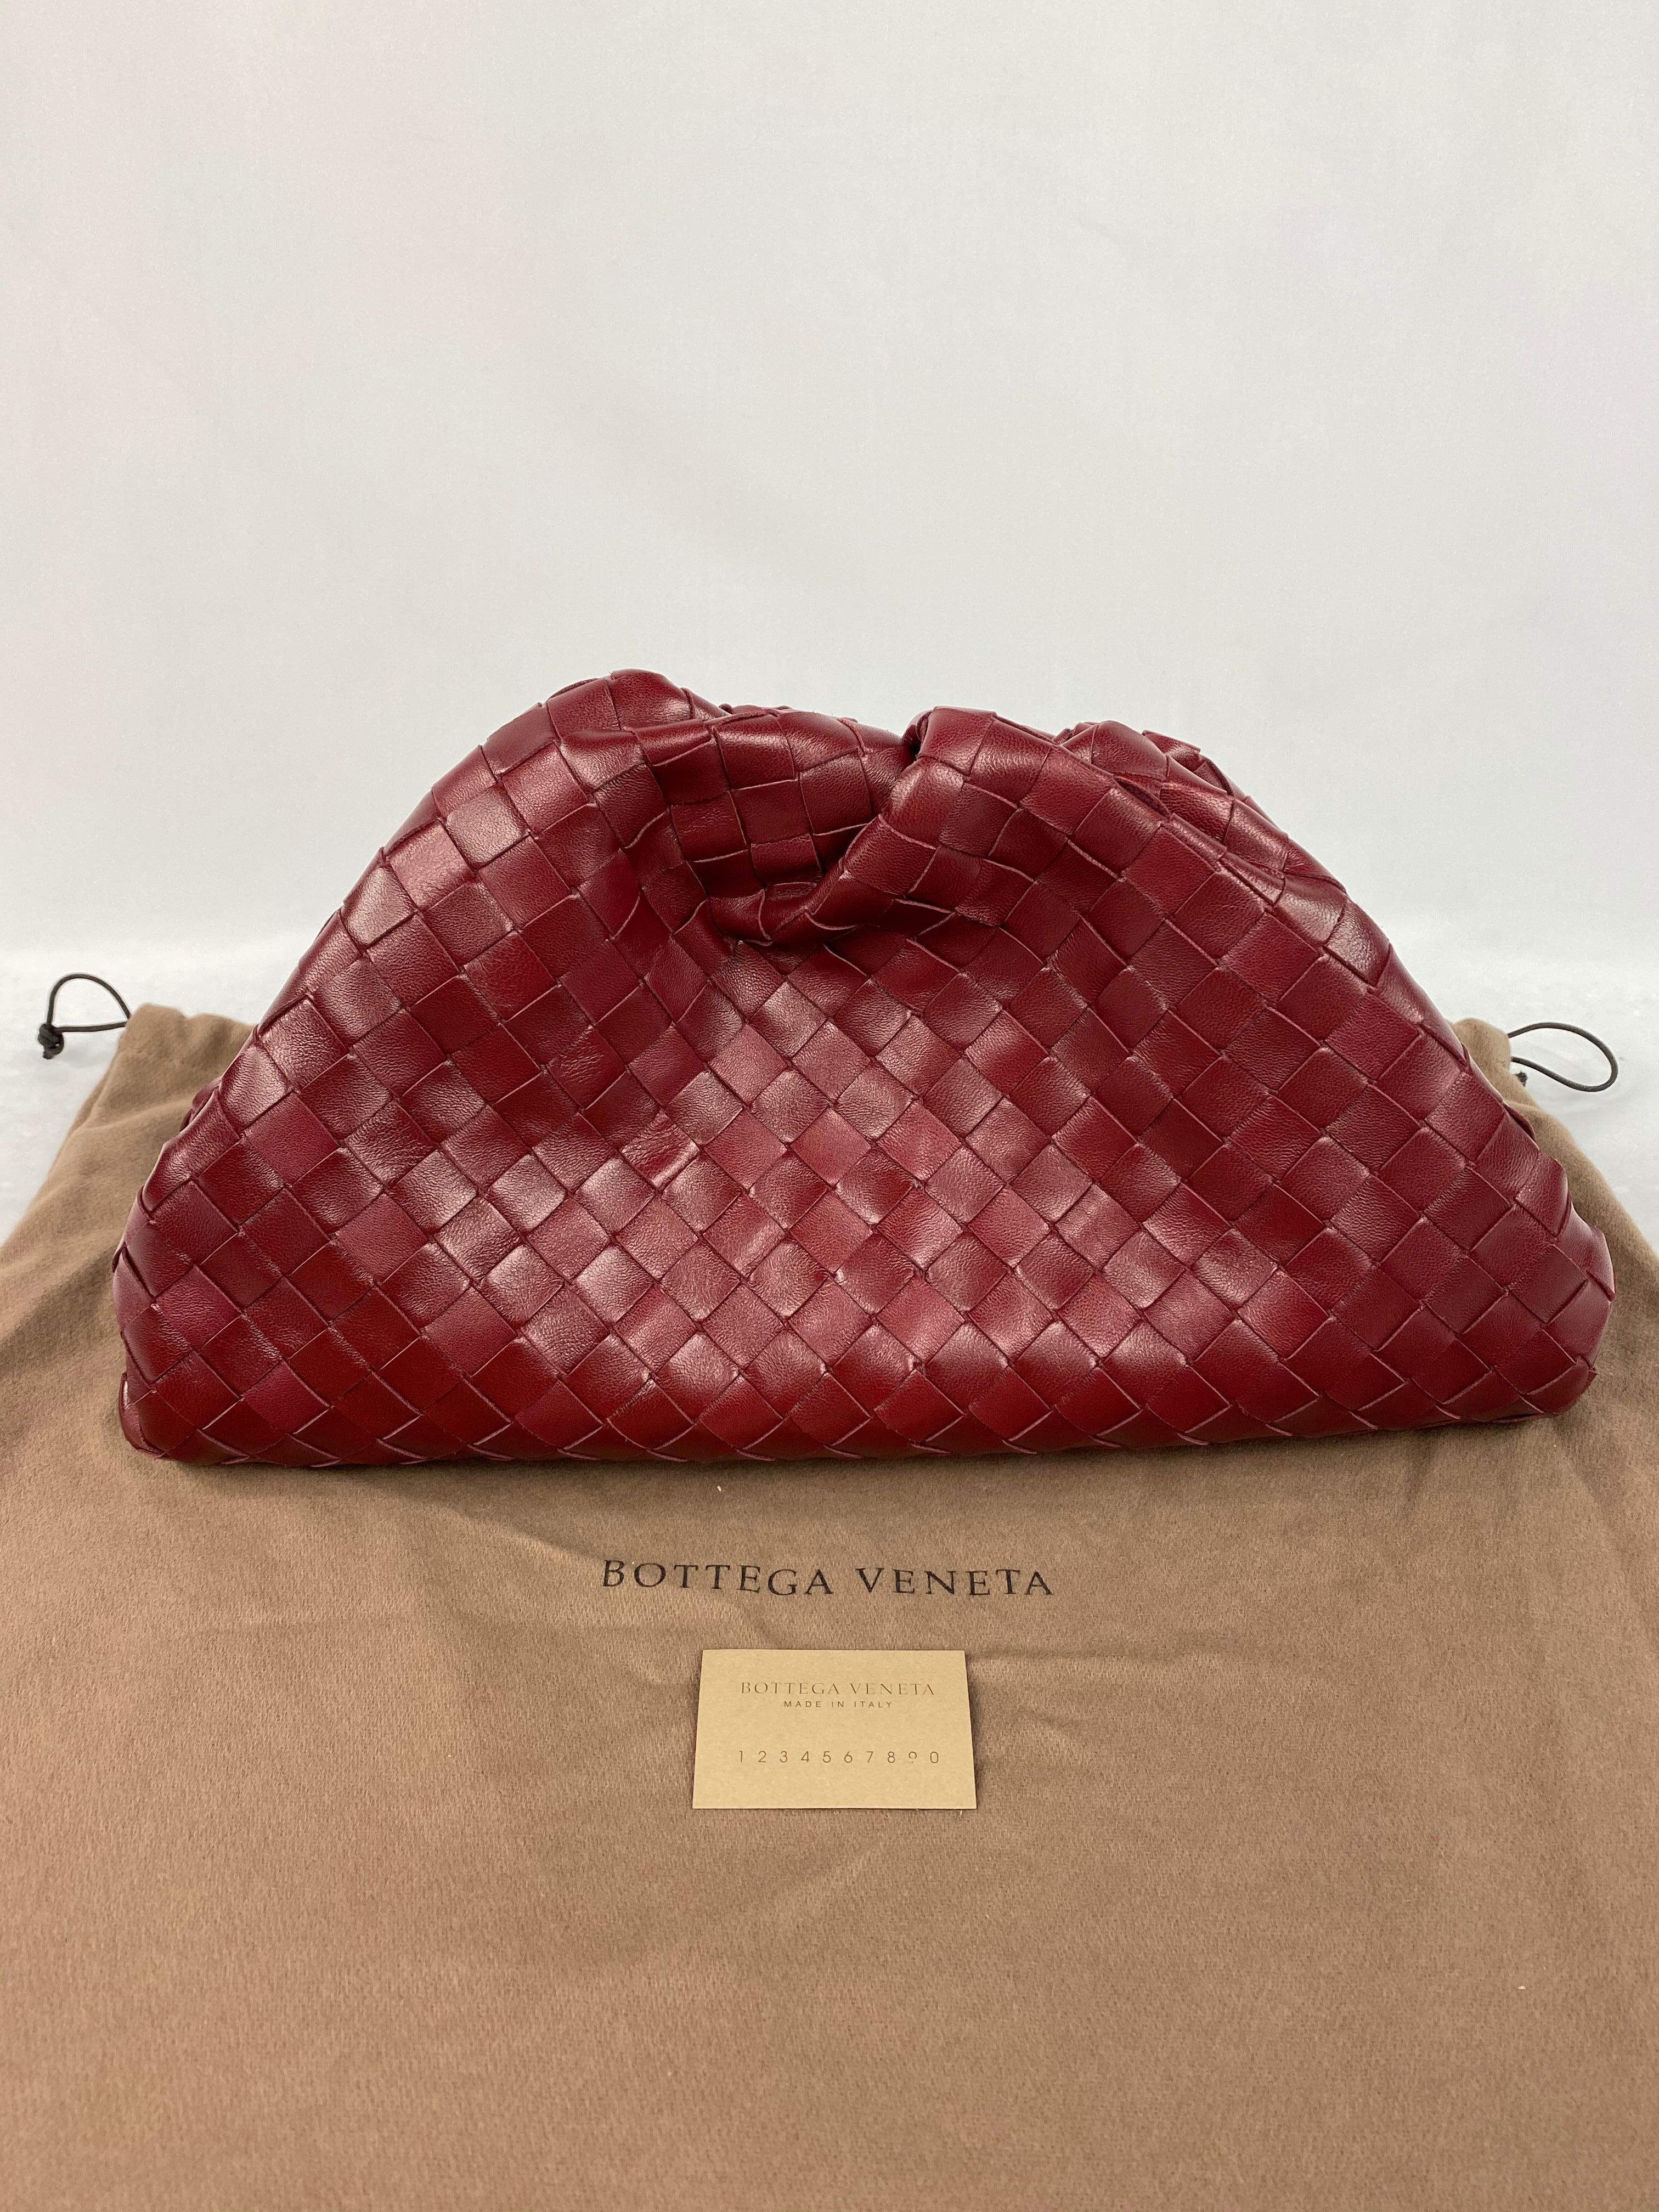 Bottega Veneta The Pouch Red Leather Clutch Purse Handbag  4